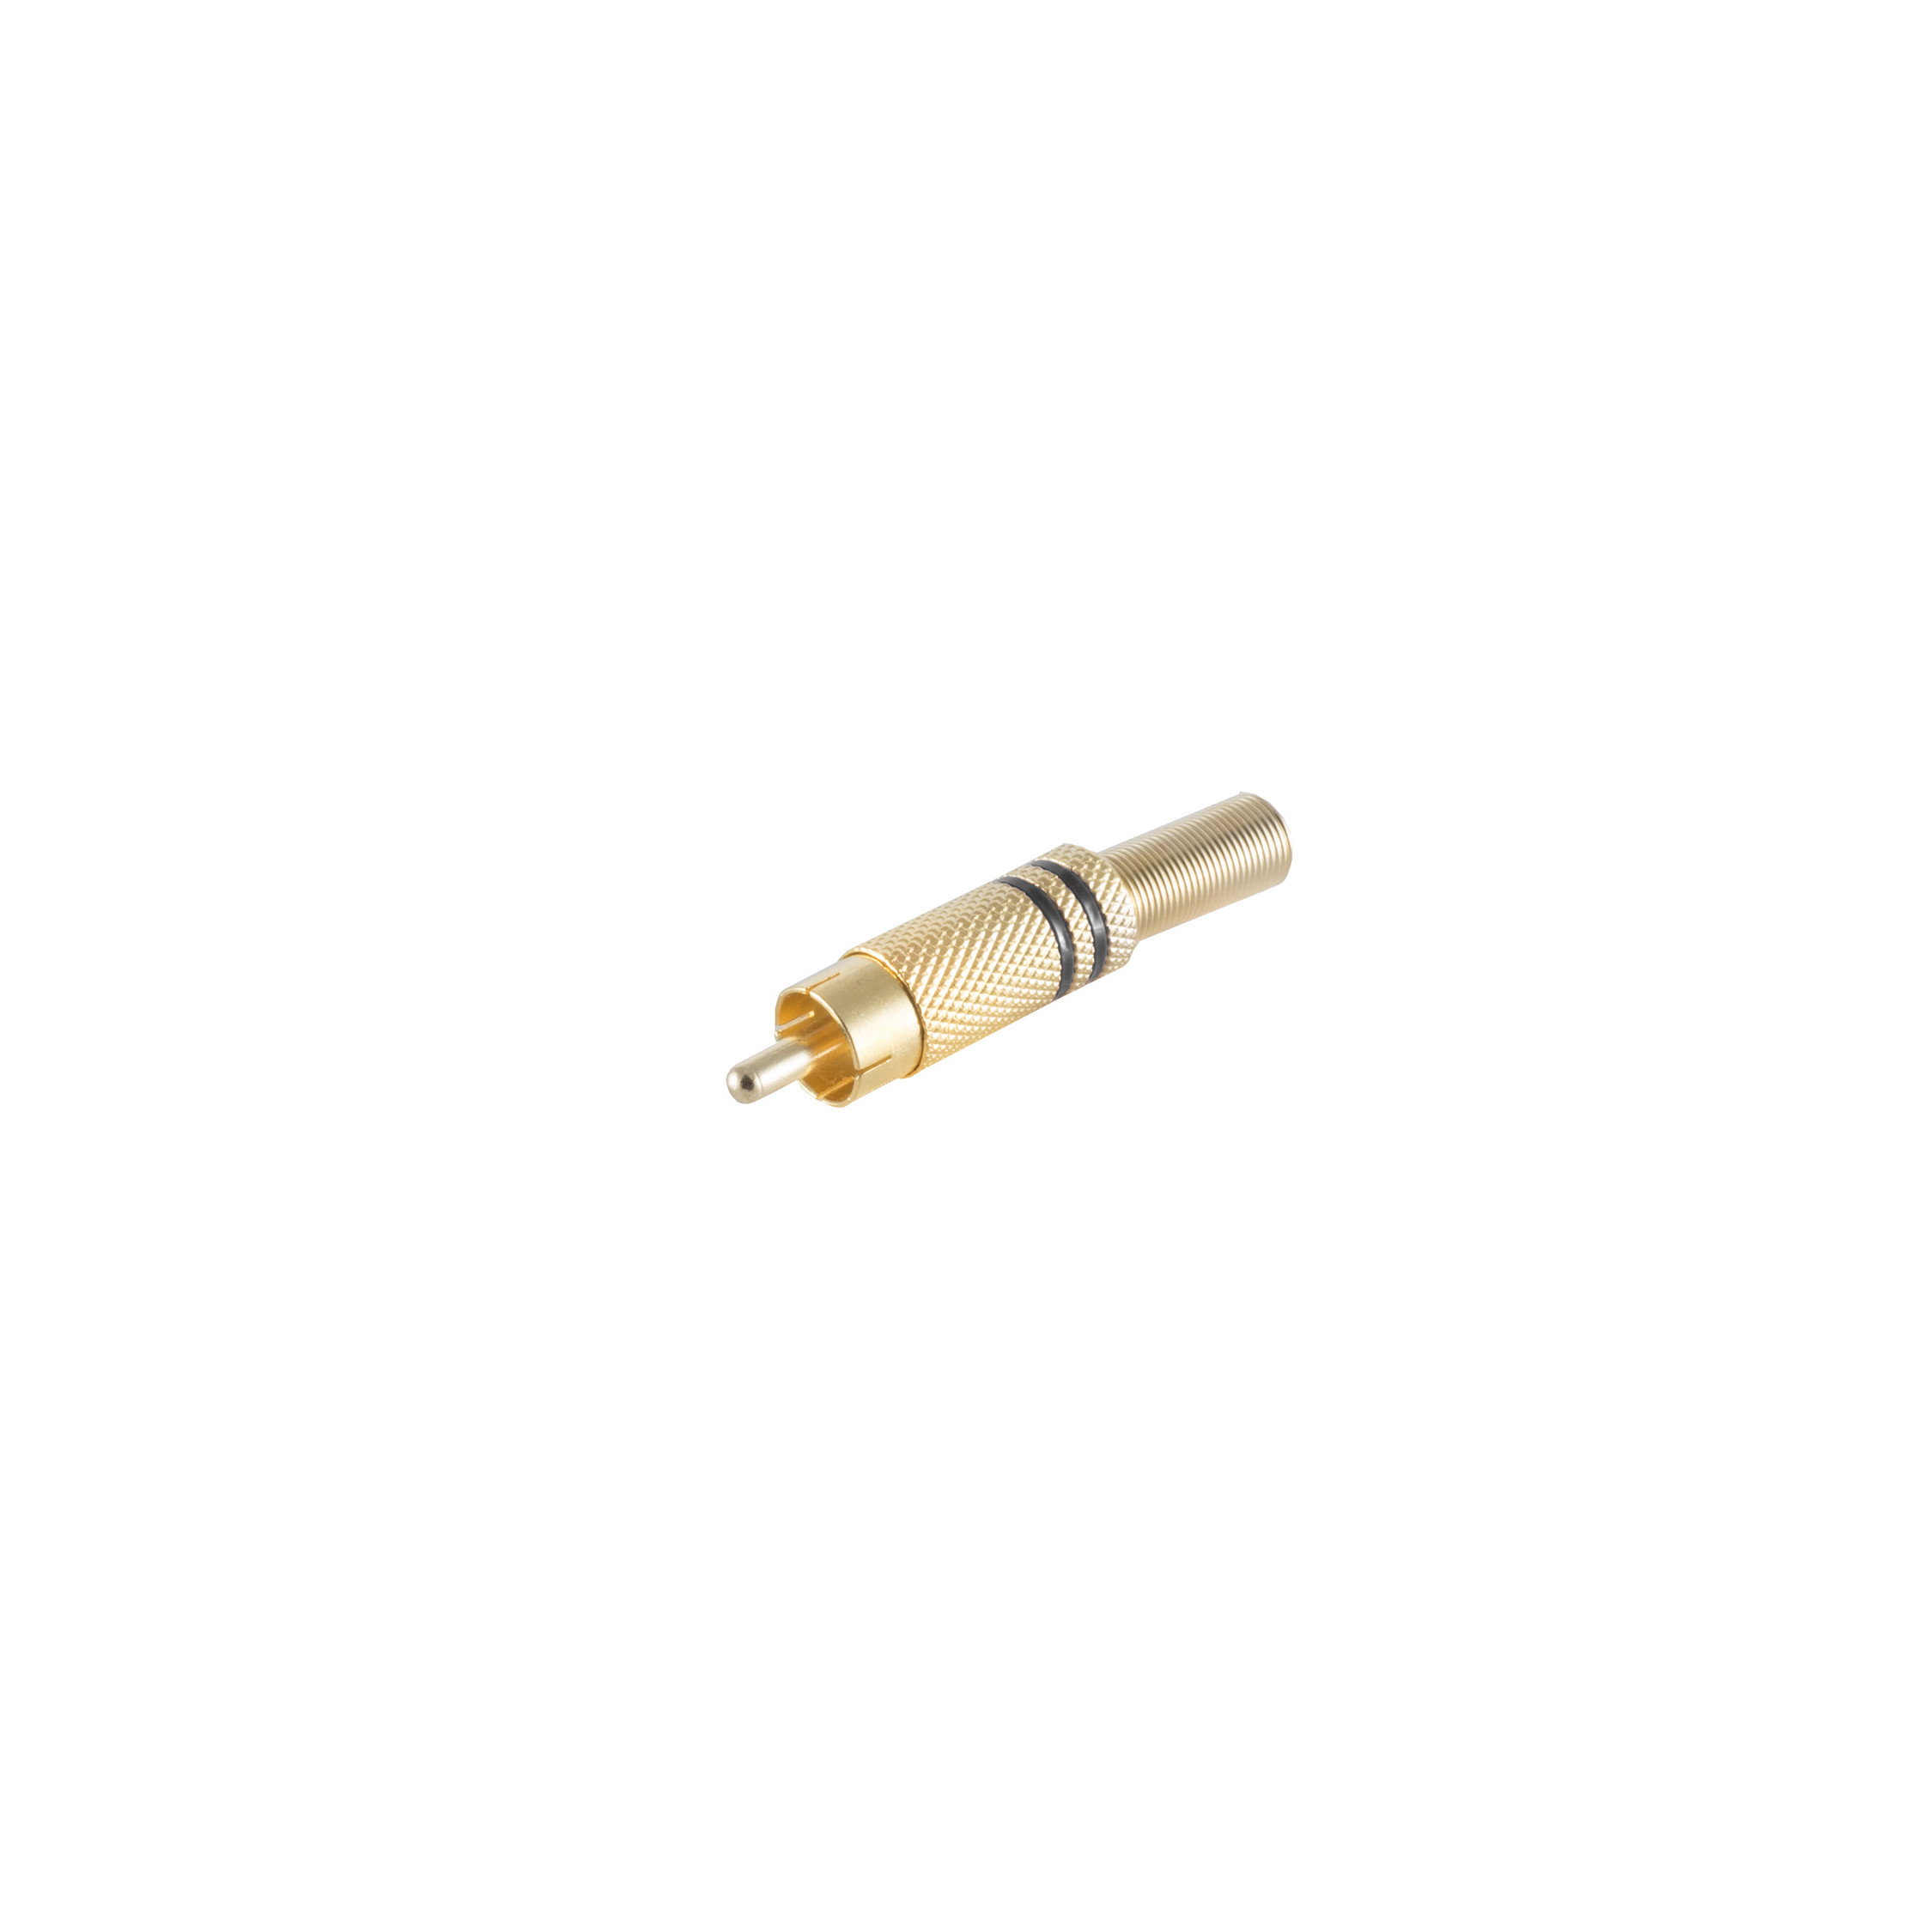 Metall Stecker/ Adapter vergoldet, 6mm, SHIVERPEAKS Cinchstecker schwarz,